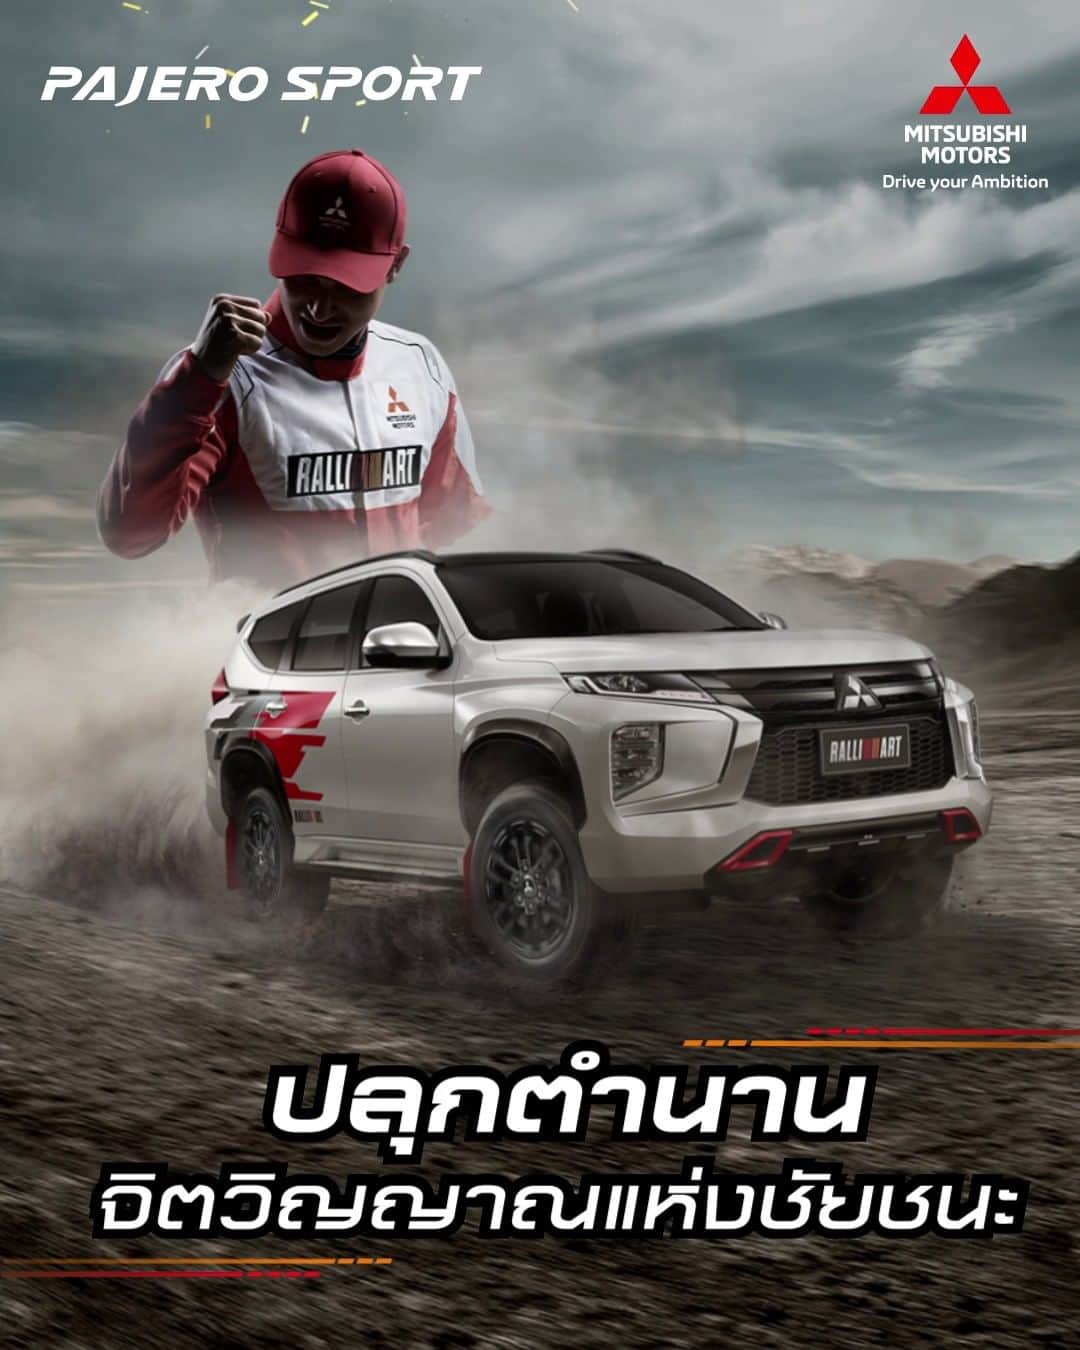 Mitsubishi Motors Thailandのインスタグラム：「เติมเต็มความท้าทายสู่ทุกจุดหมาย ไปกับ "มิตซูบิชิ ปาเจโร สปอร์ต แรลลี่อาร์ท" ด้วยสุดยอดเทคโนโลยีจากตำนานที่ยิ่งใหญ่ ราชาแห่งทะเลทราย สู่สมรรถนะการขับขี่ที่ทรงพลัง ที่มาพร้อมดีไซน์การออกแบบแรงบันดาลใจจากรถแข่งแรลลี่ จุดเริ่มต้นการขับขี่ที่เร้าใจ ปลุกตำนานจิตวิญญาณแห่งชัยชนะในตัวคุณ พร้อมให้คุณเป็นเจ้าของแล้ว วันนี้ที่โชว์รูมทั่วประเทศ  #RALLIART  #MitsubishiMotorsThailand」